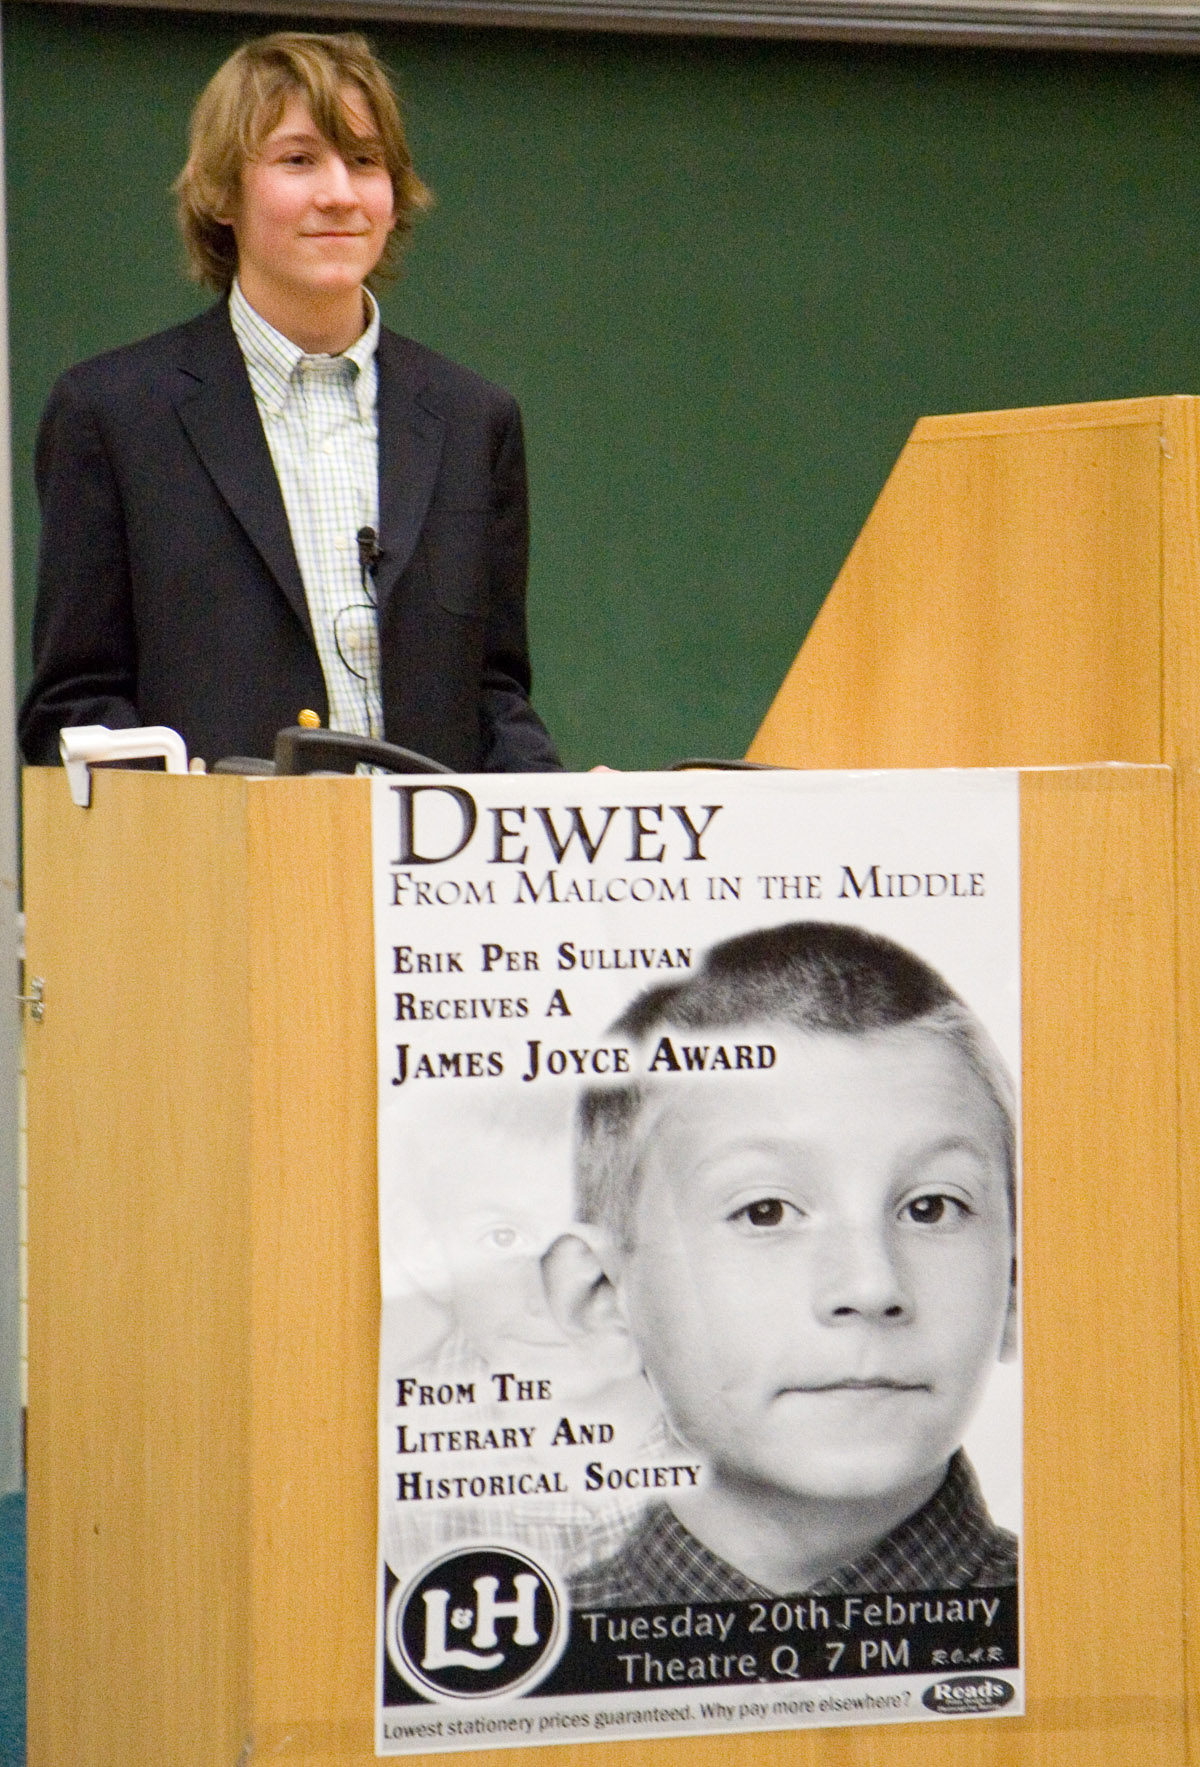 Erik Per Sullivan receives the 'James Joyce Award' (2007)